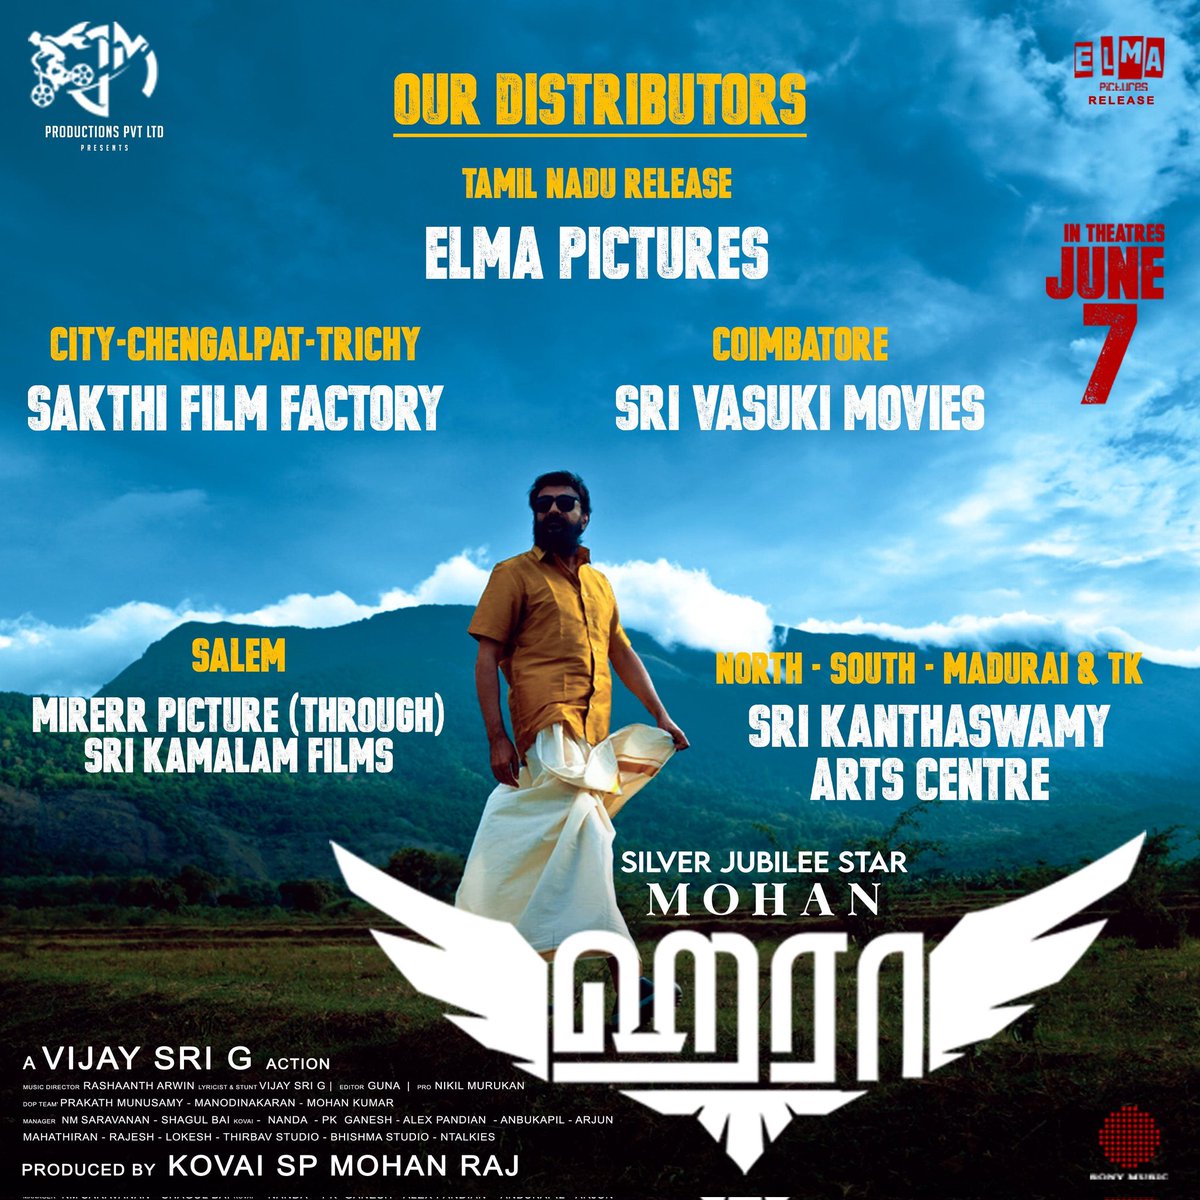 #SilverJubileeStar #Mohan starring #Haraa, TN Release by @ELMA_PICTURES City, Chengalpet & Trichy - @SakthiFilmFctry Coimbatore - #SriVasukiMovies Salem - #Mirrerpicture North South Madurai & TK - #SriKanthaswamyArtsCentre #HaraaFromJune7th A @vijaysrig Action #ஹரா